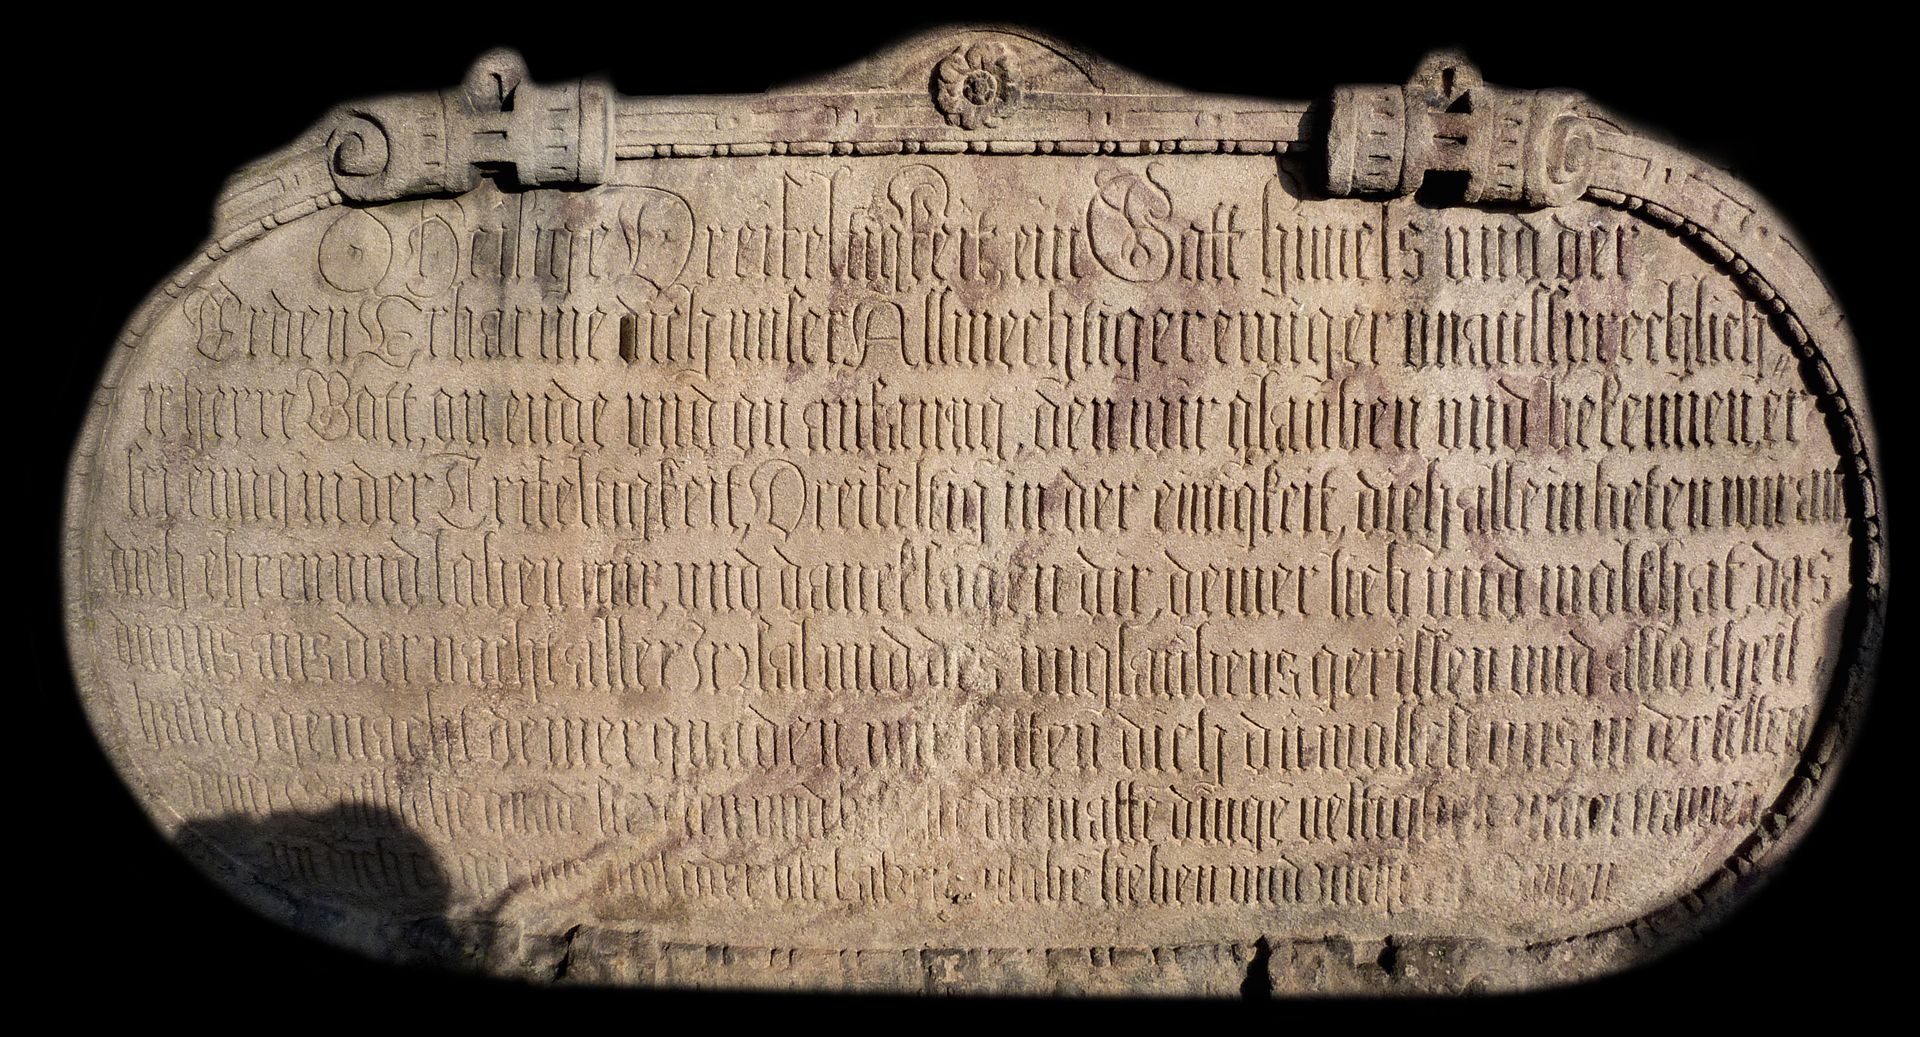 Gedächtnisstein des Wolfgang Müntzer Basis, Inschrift, Frontal